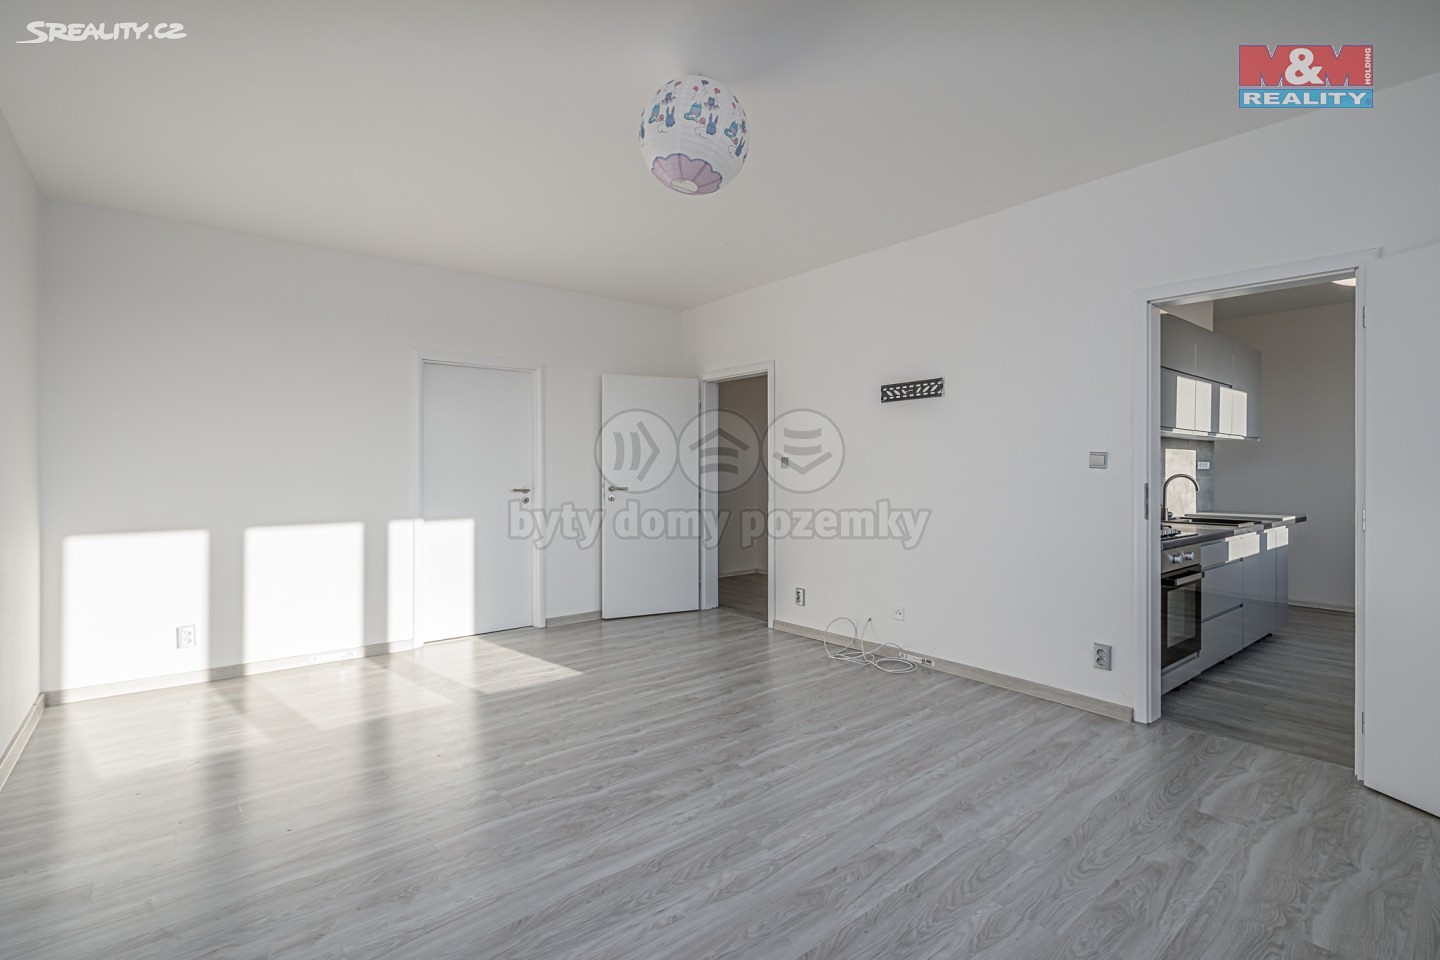 Pronájem bytu 3+1 70 m², Olomouc - Nové Sady, okres Olomouc